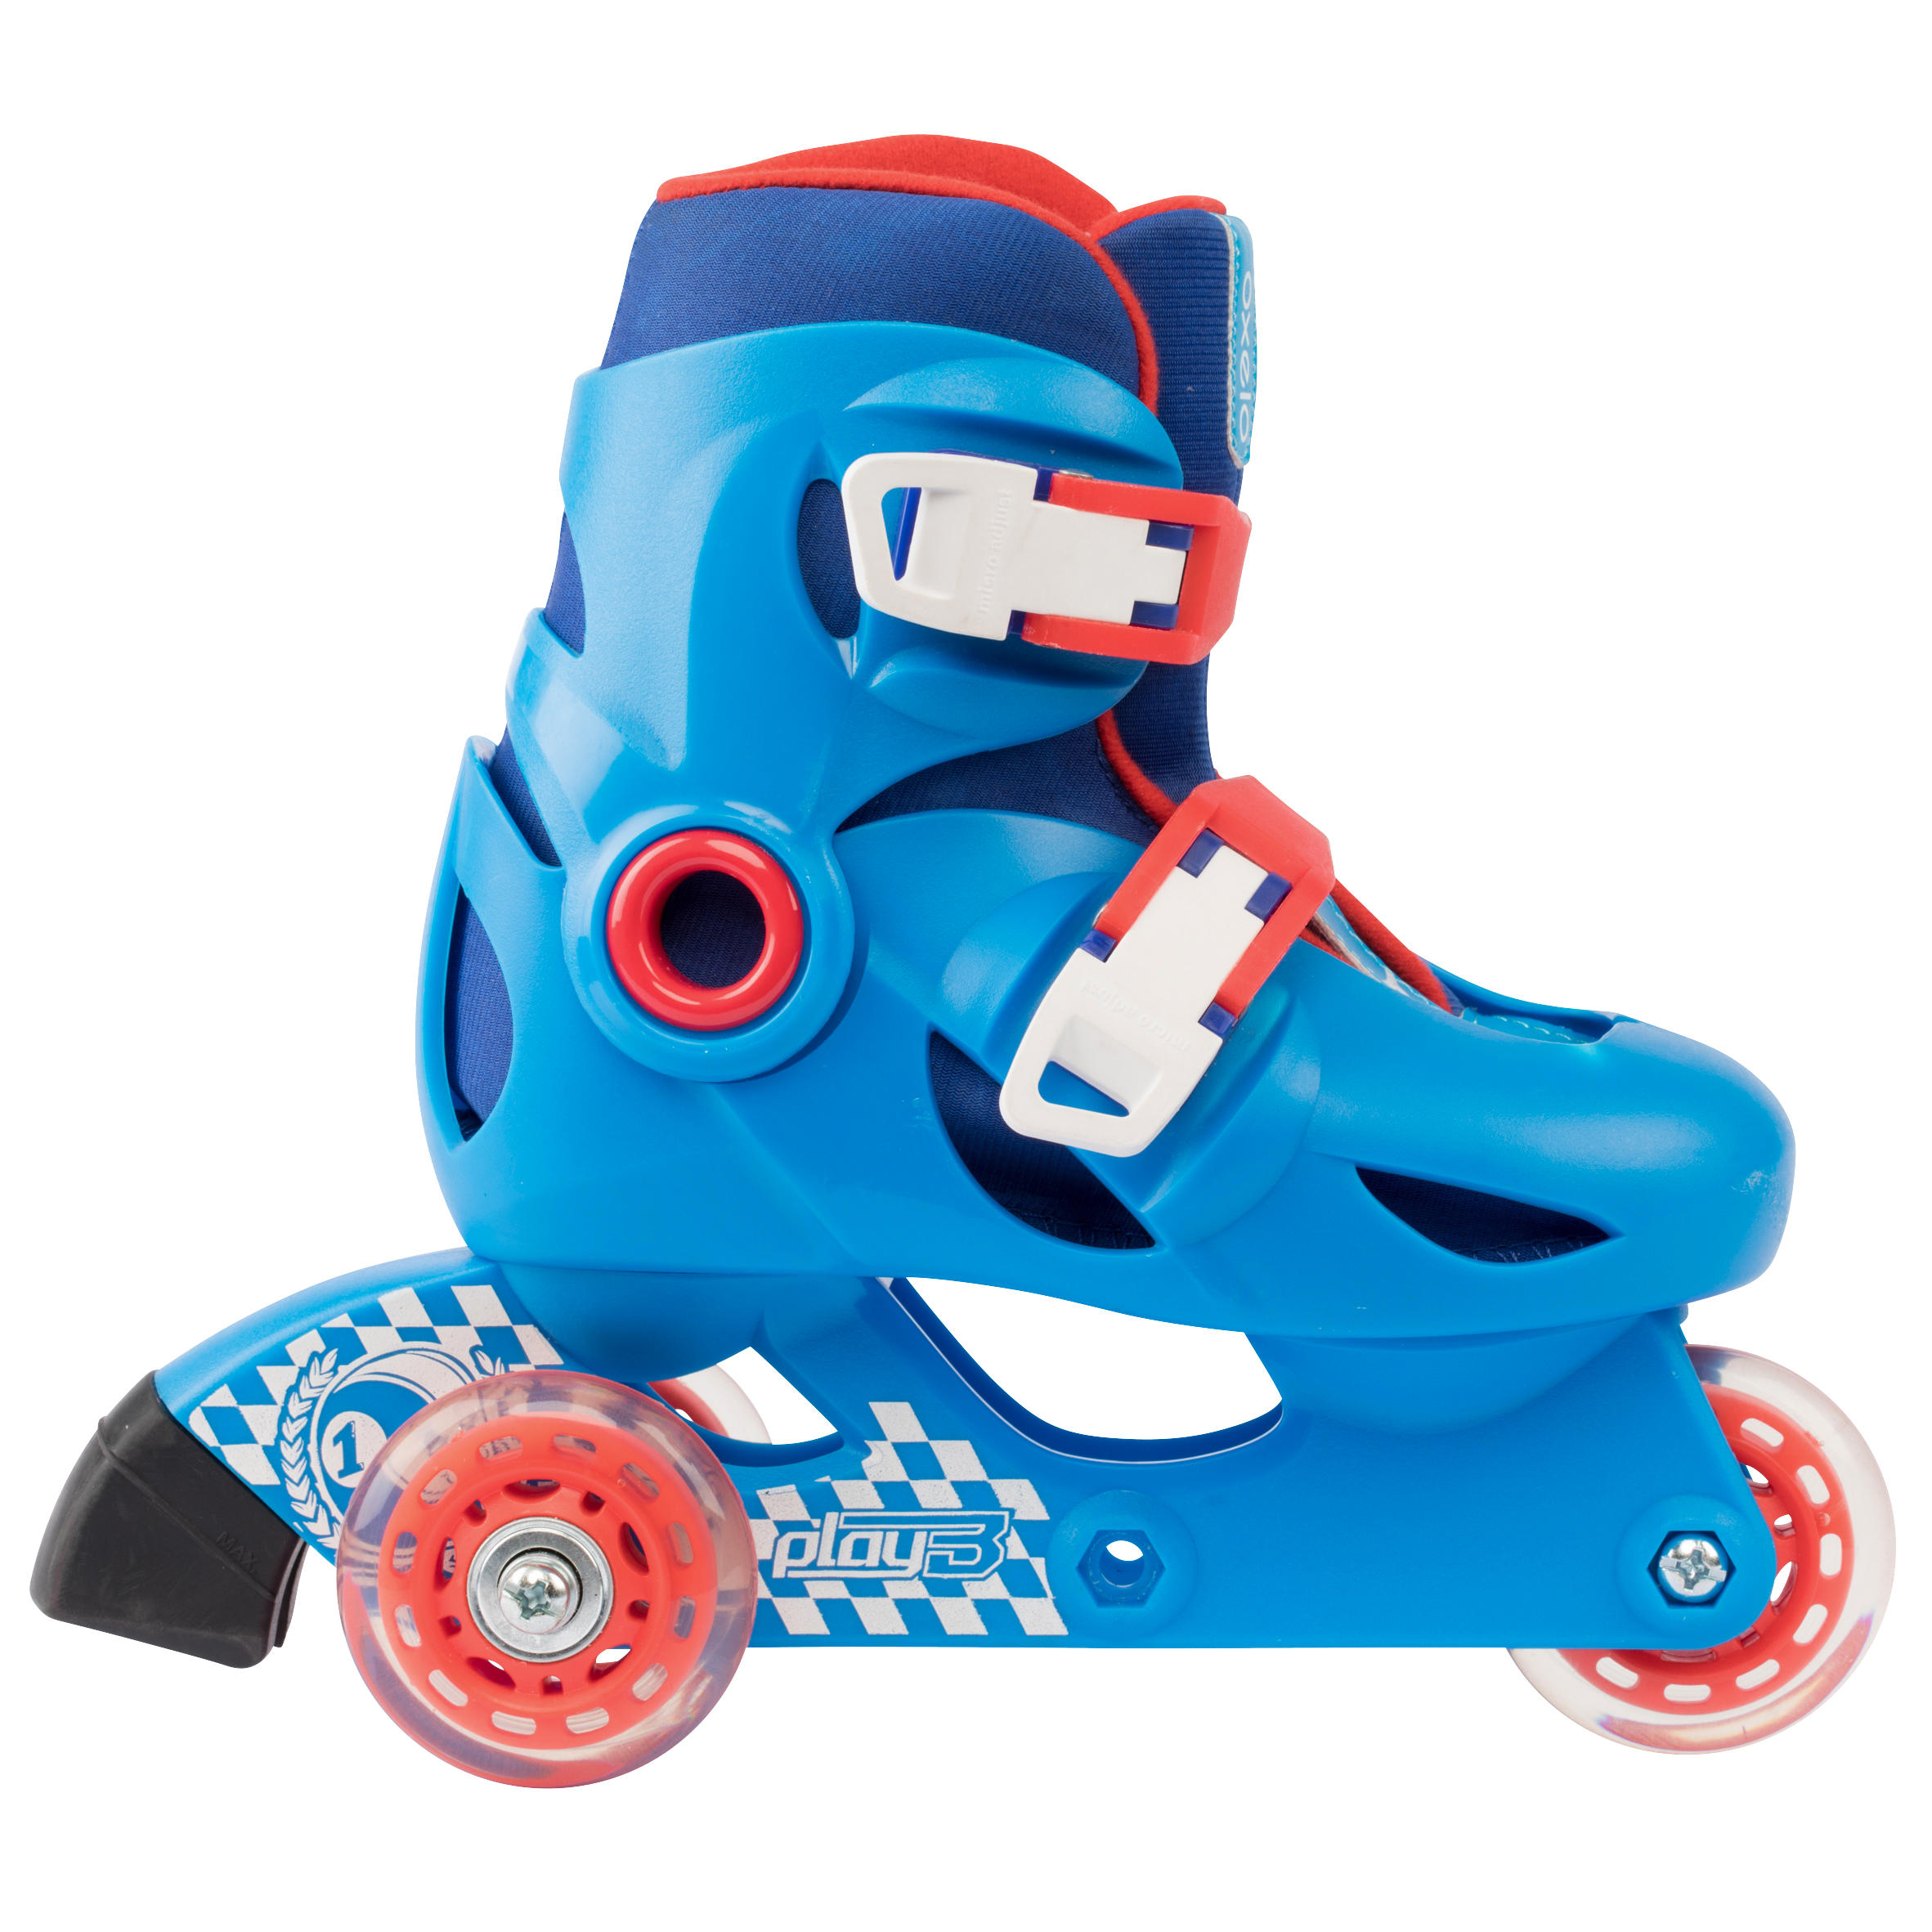 Kids' Play Skate Stability Kit - OXELO